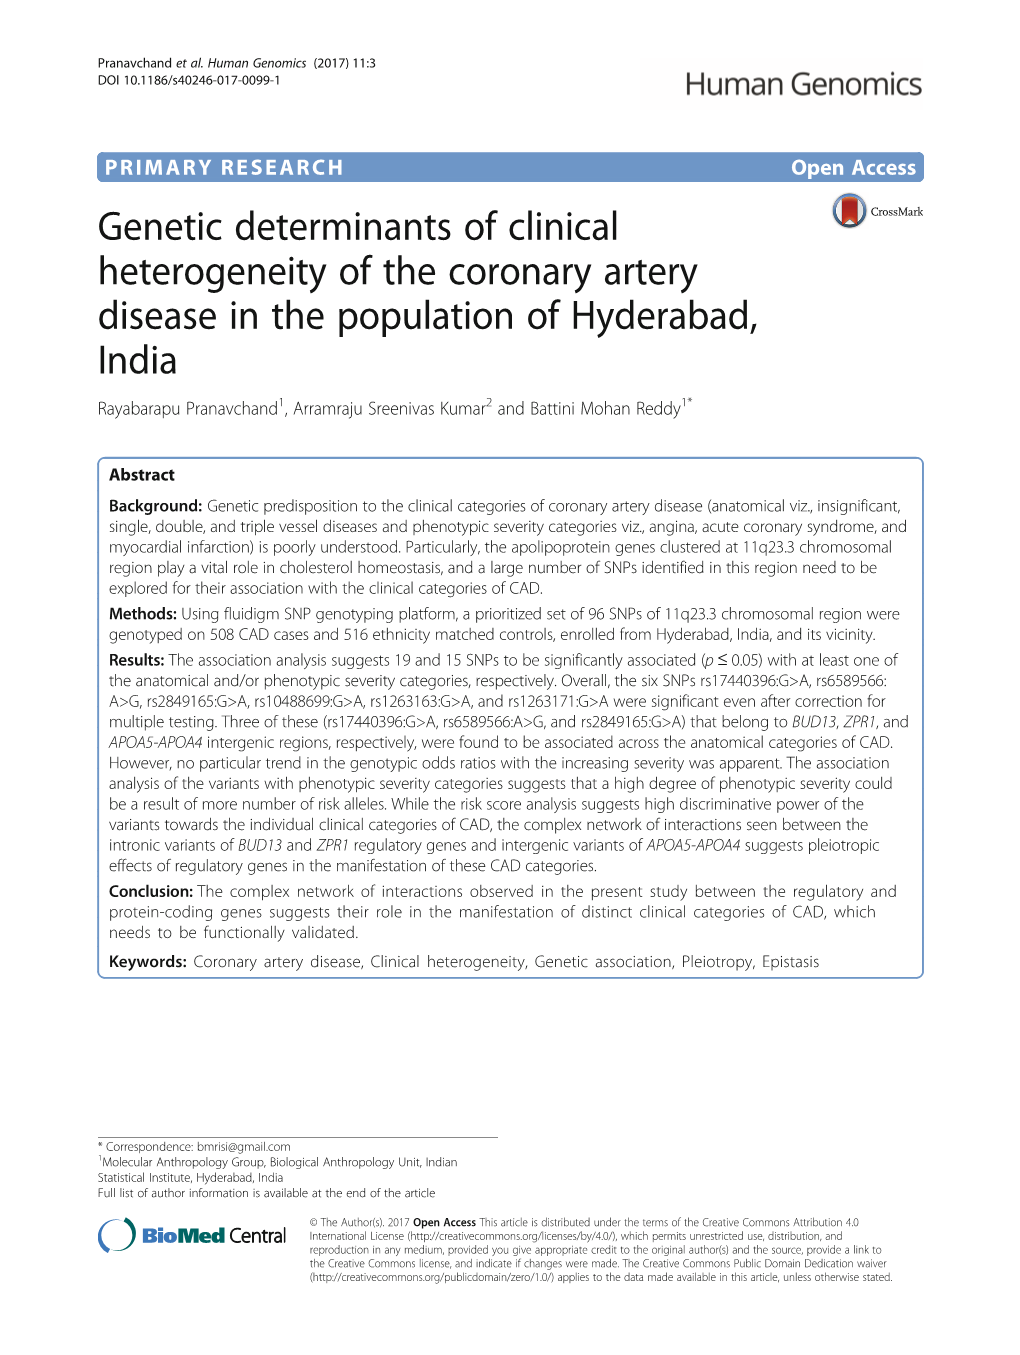 Genetic Determinants of Clinical Heterogeneity of the Coronary Artery